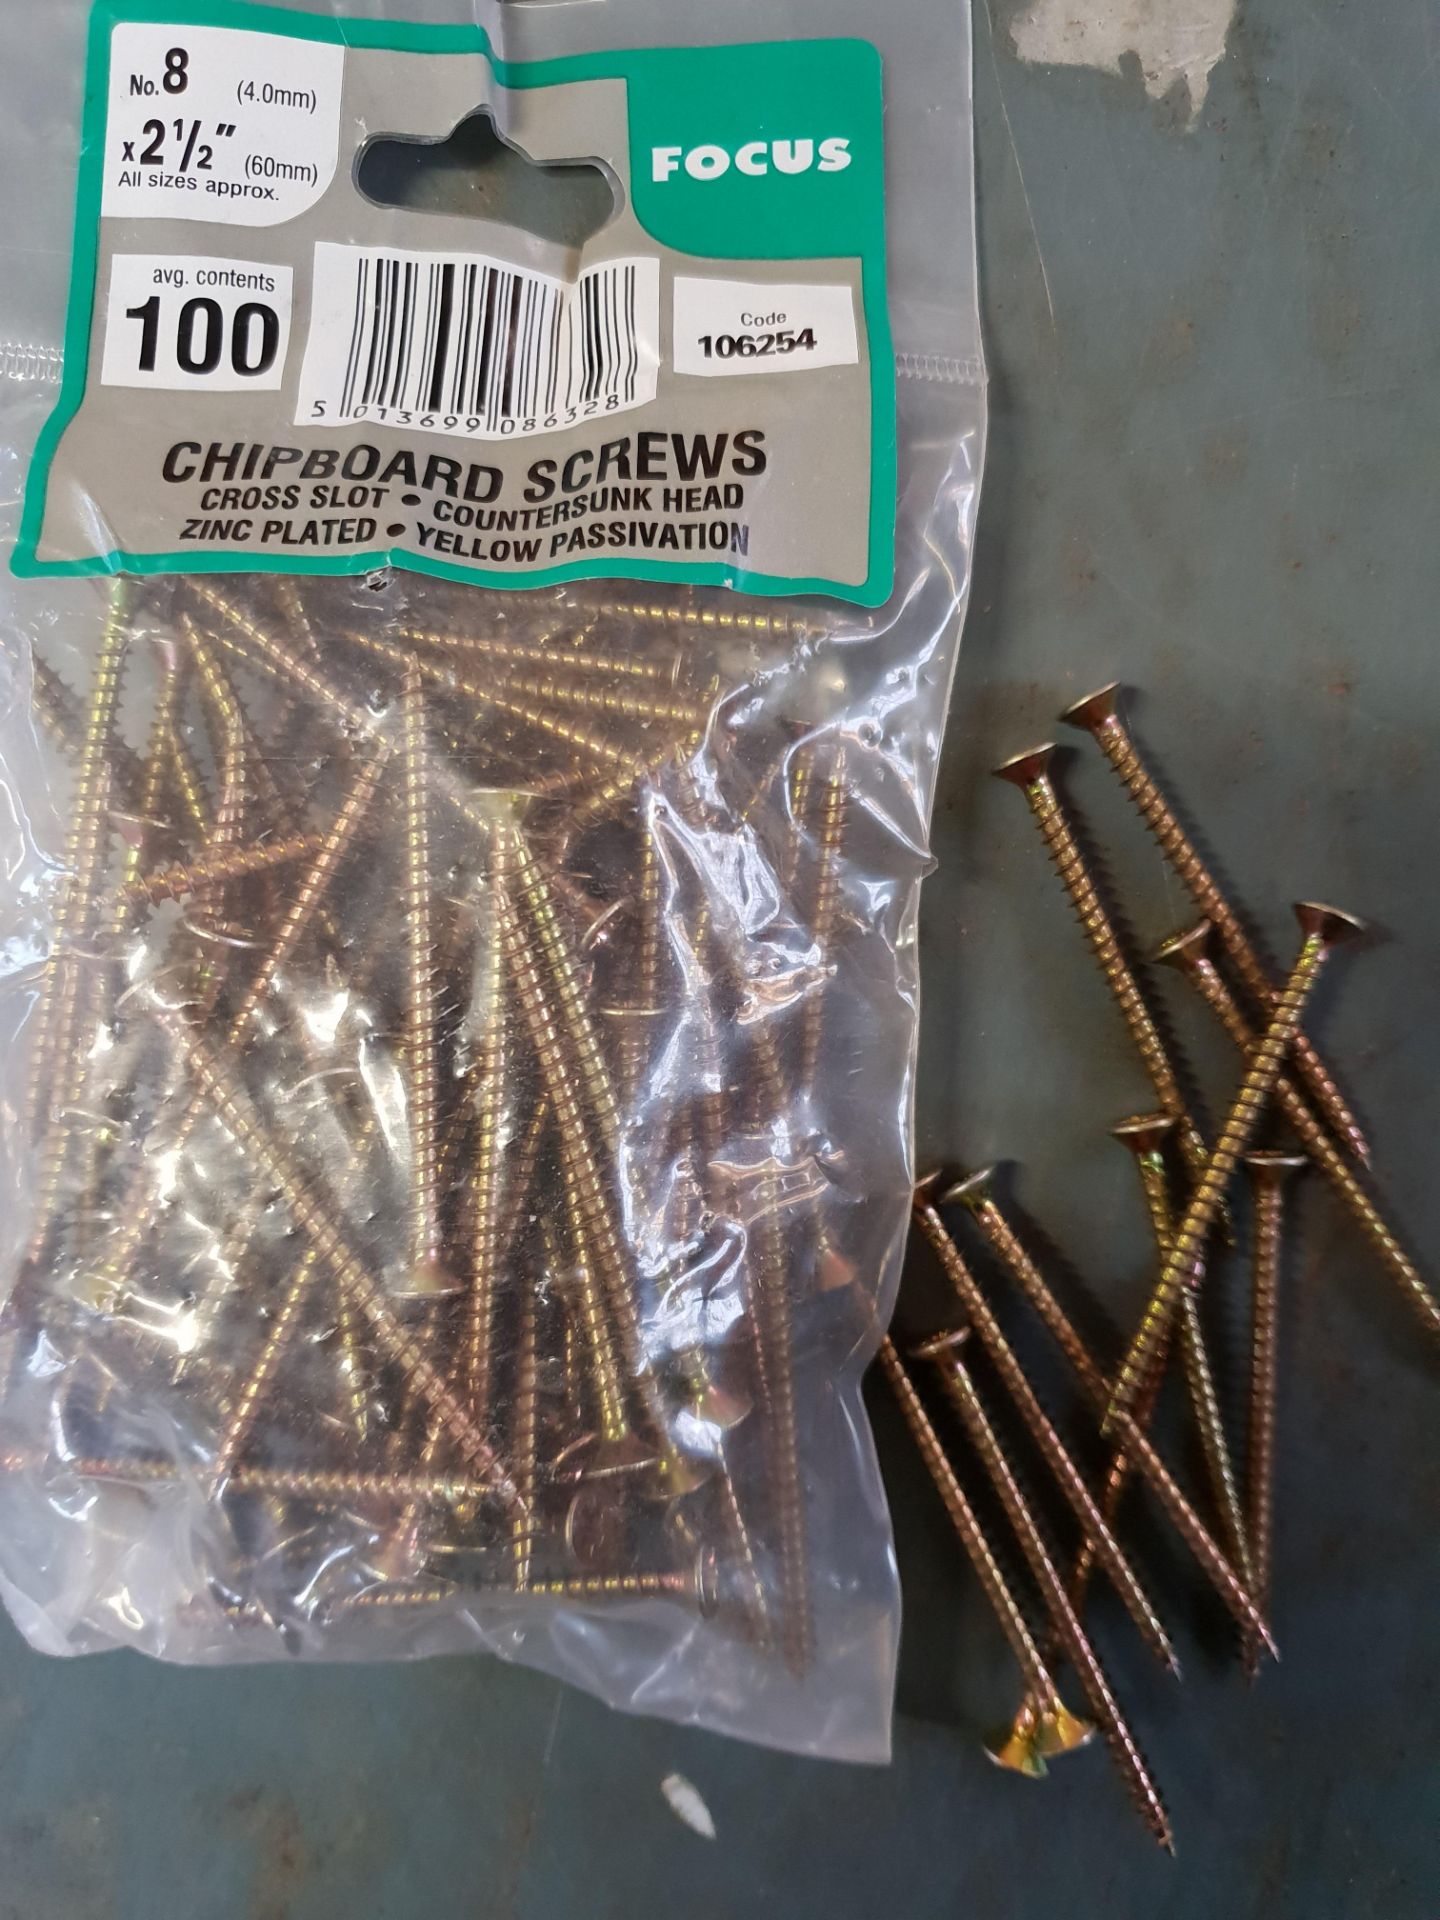 1000 - 4x60mm screws